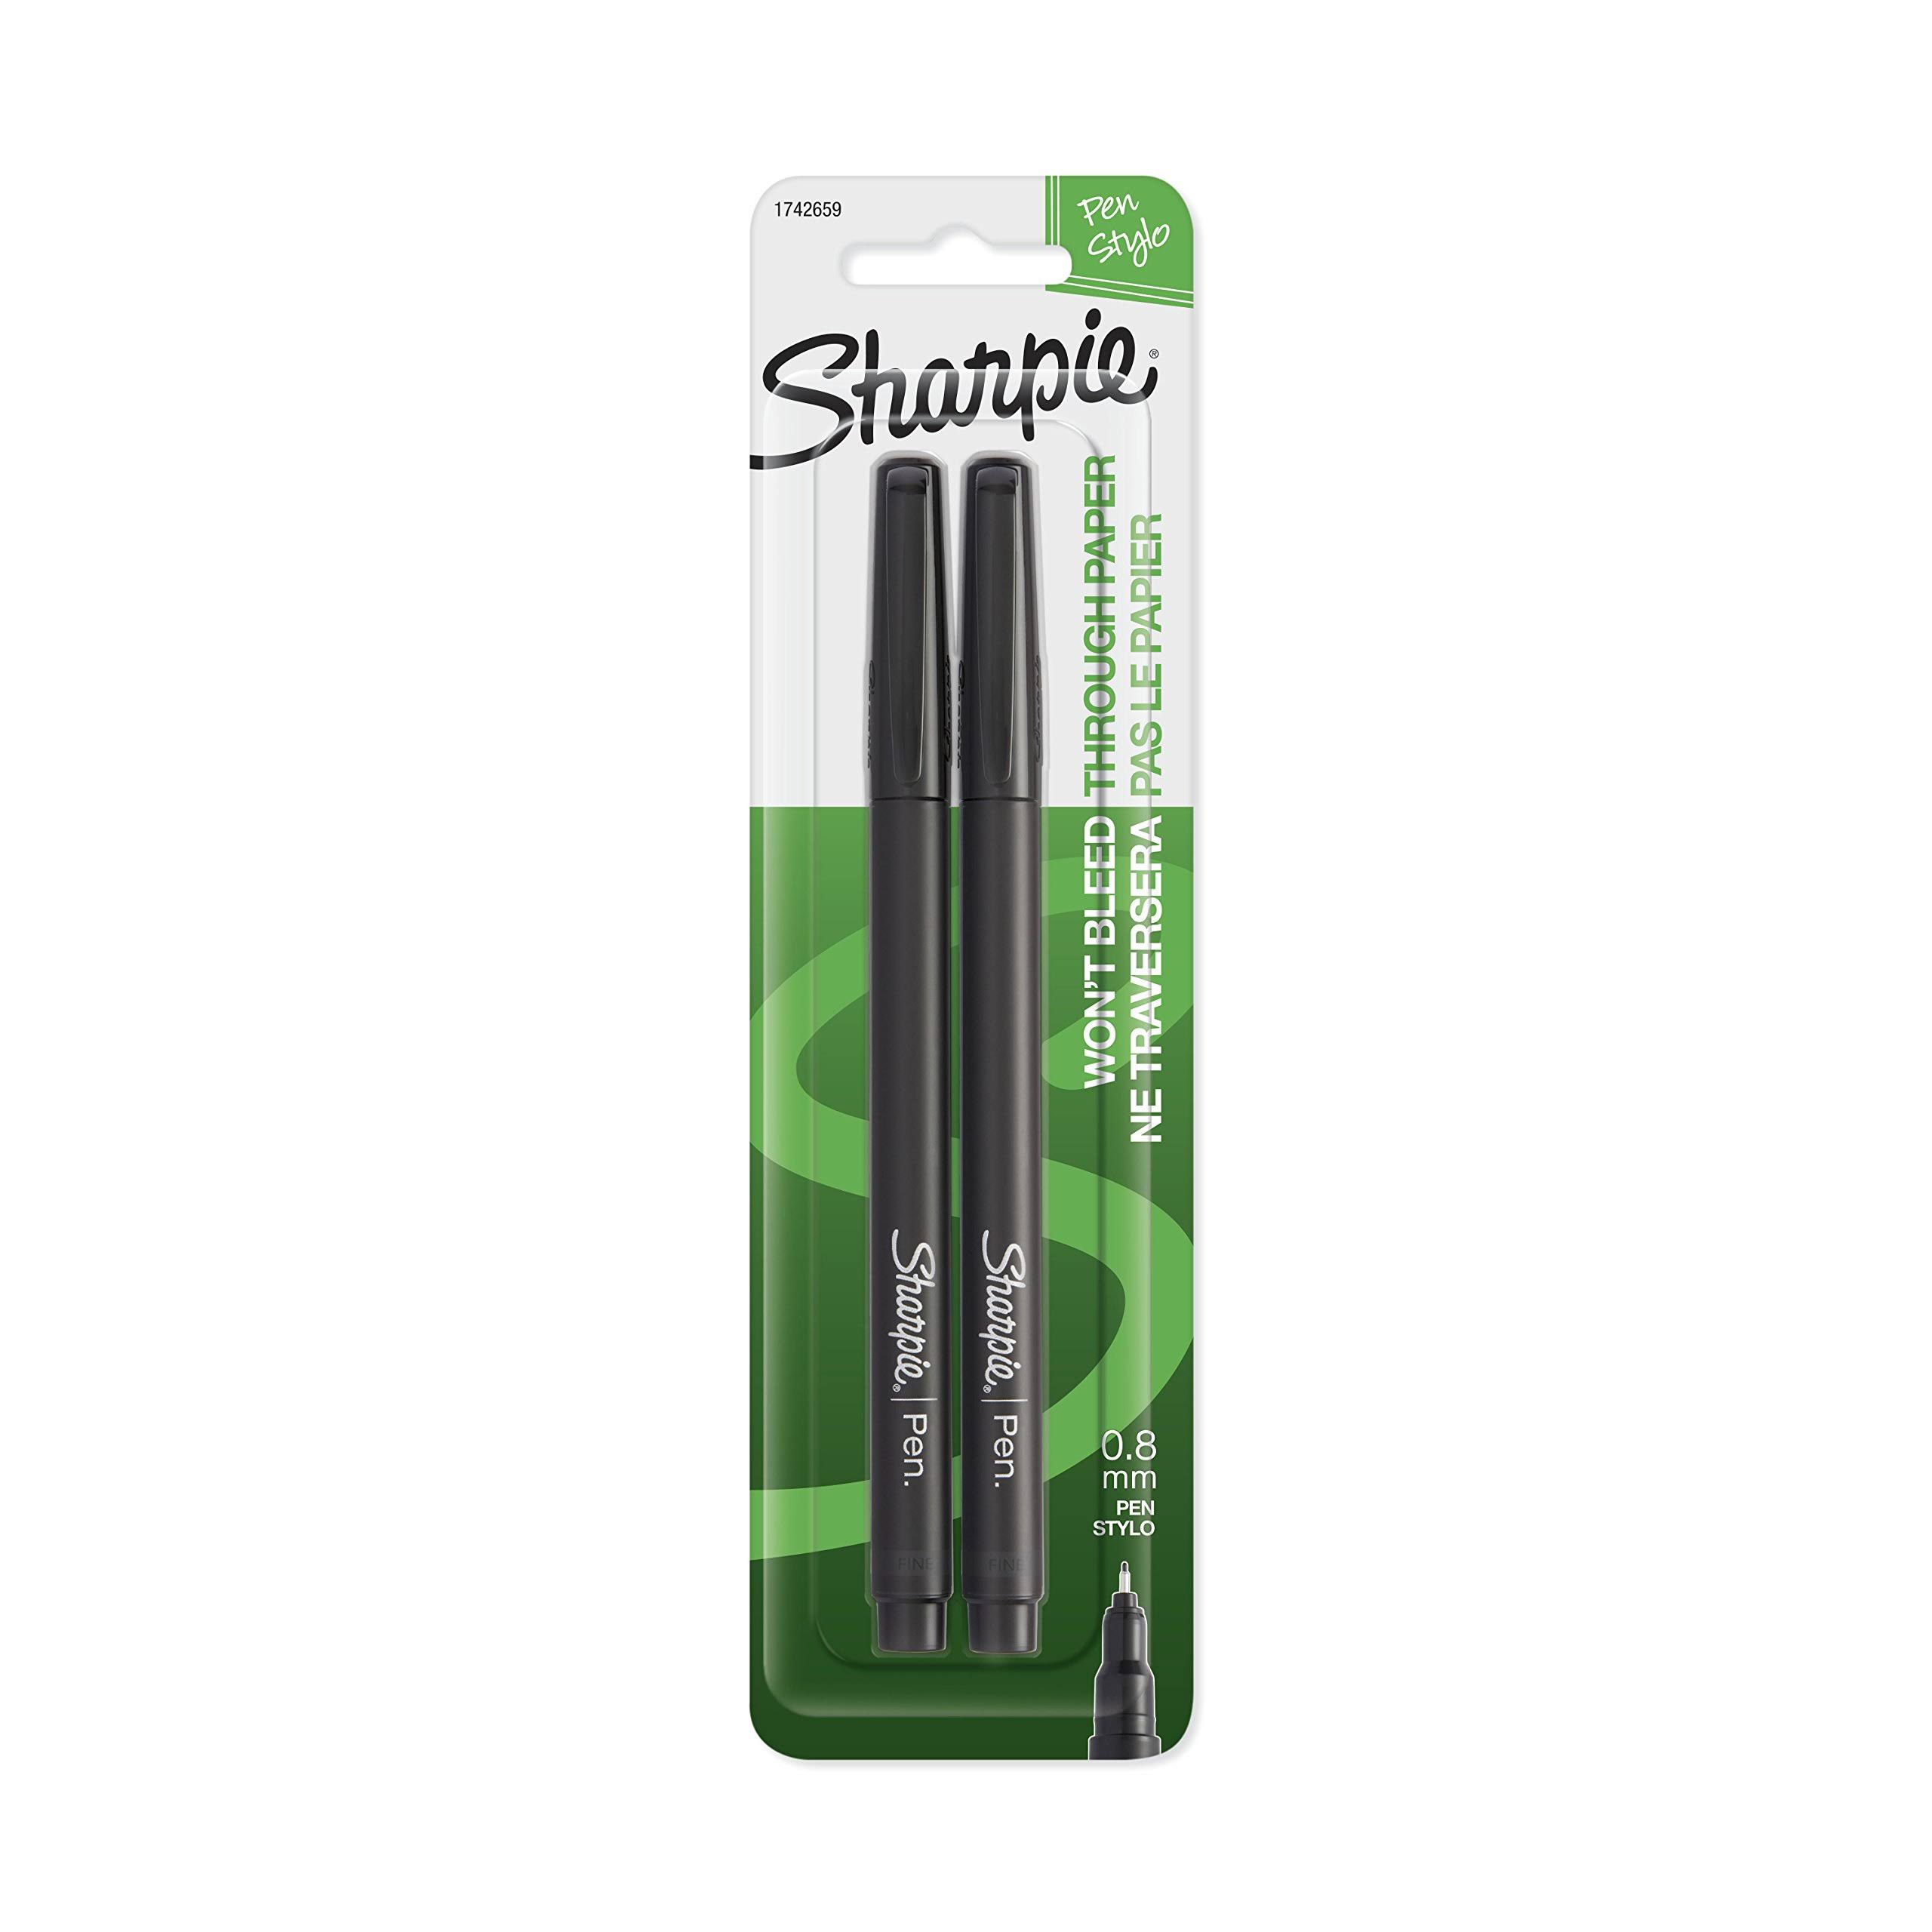 Sharpie Fine Point Pen - Black, 2 Pack